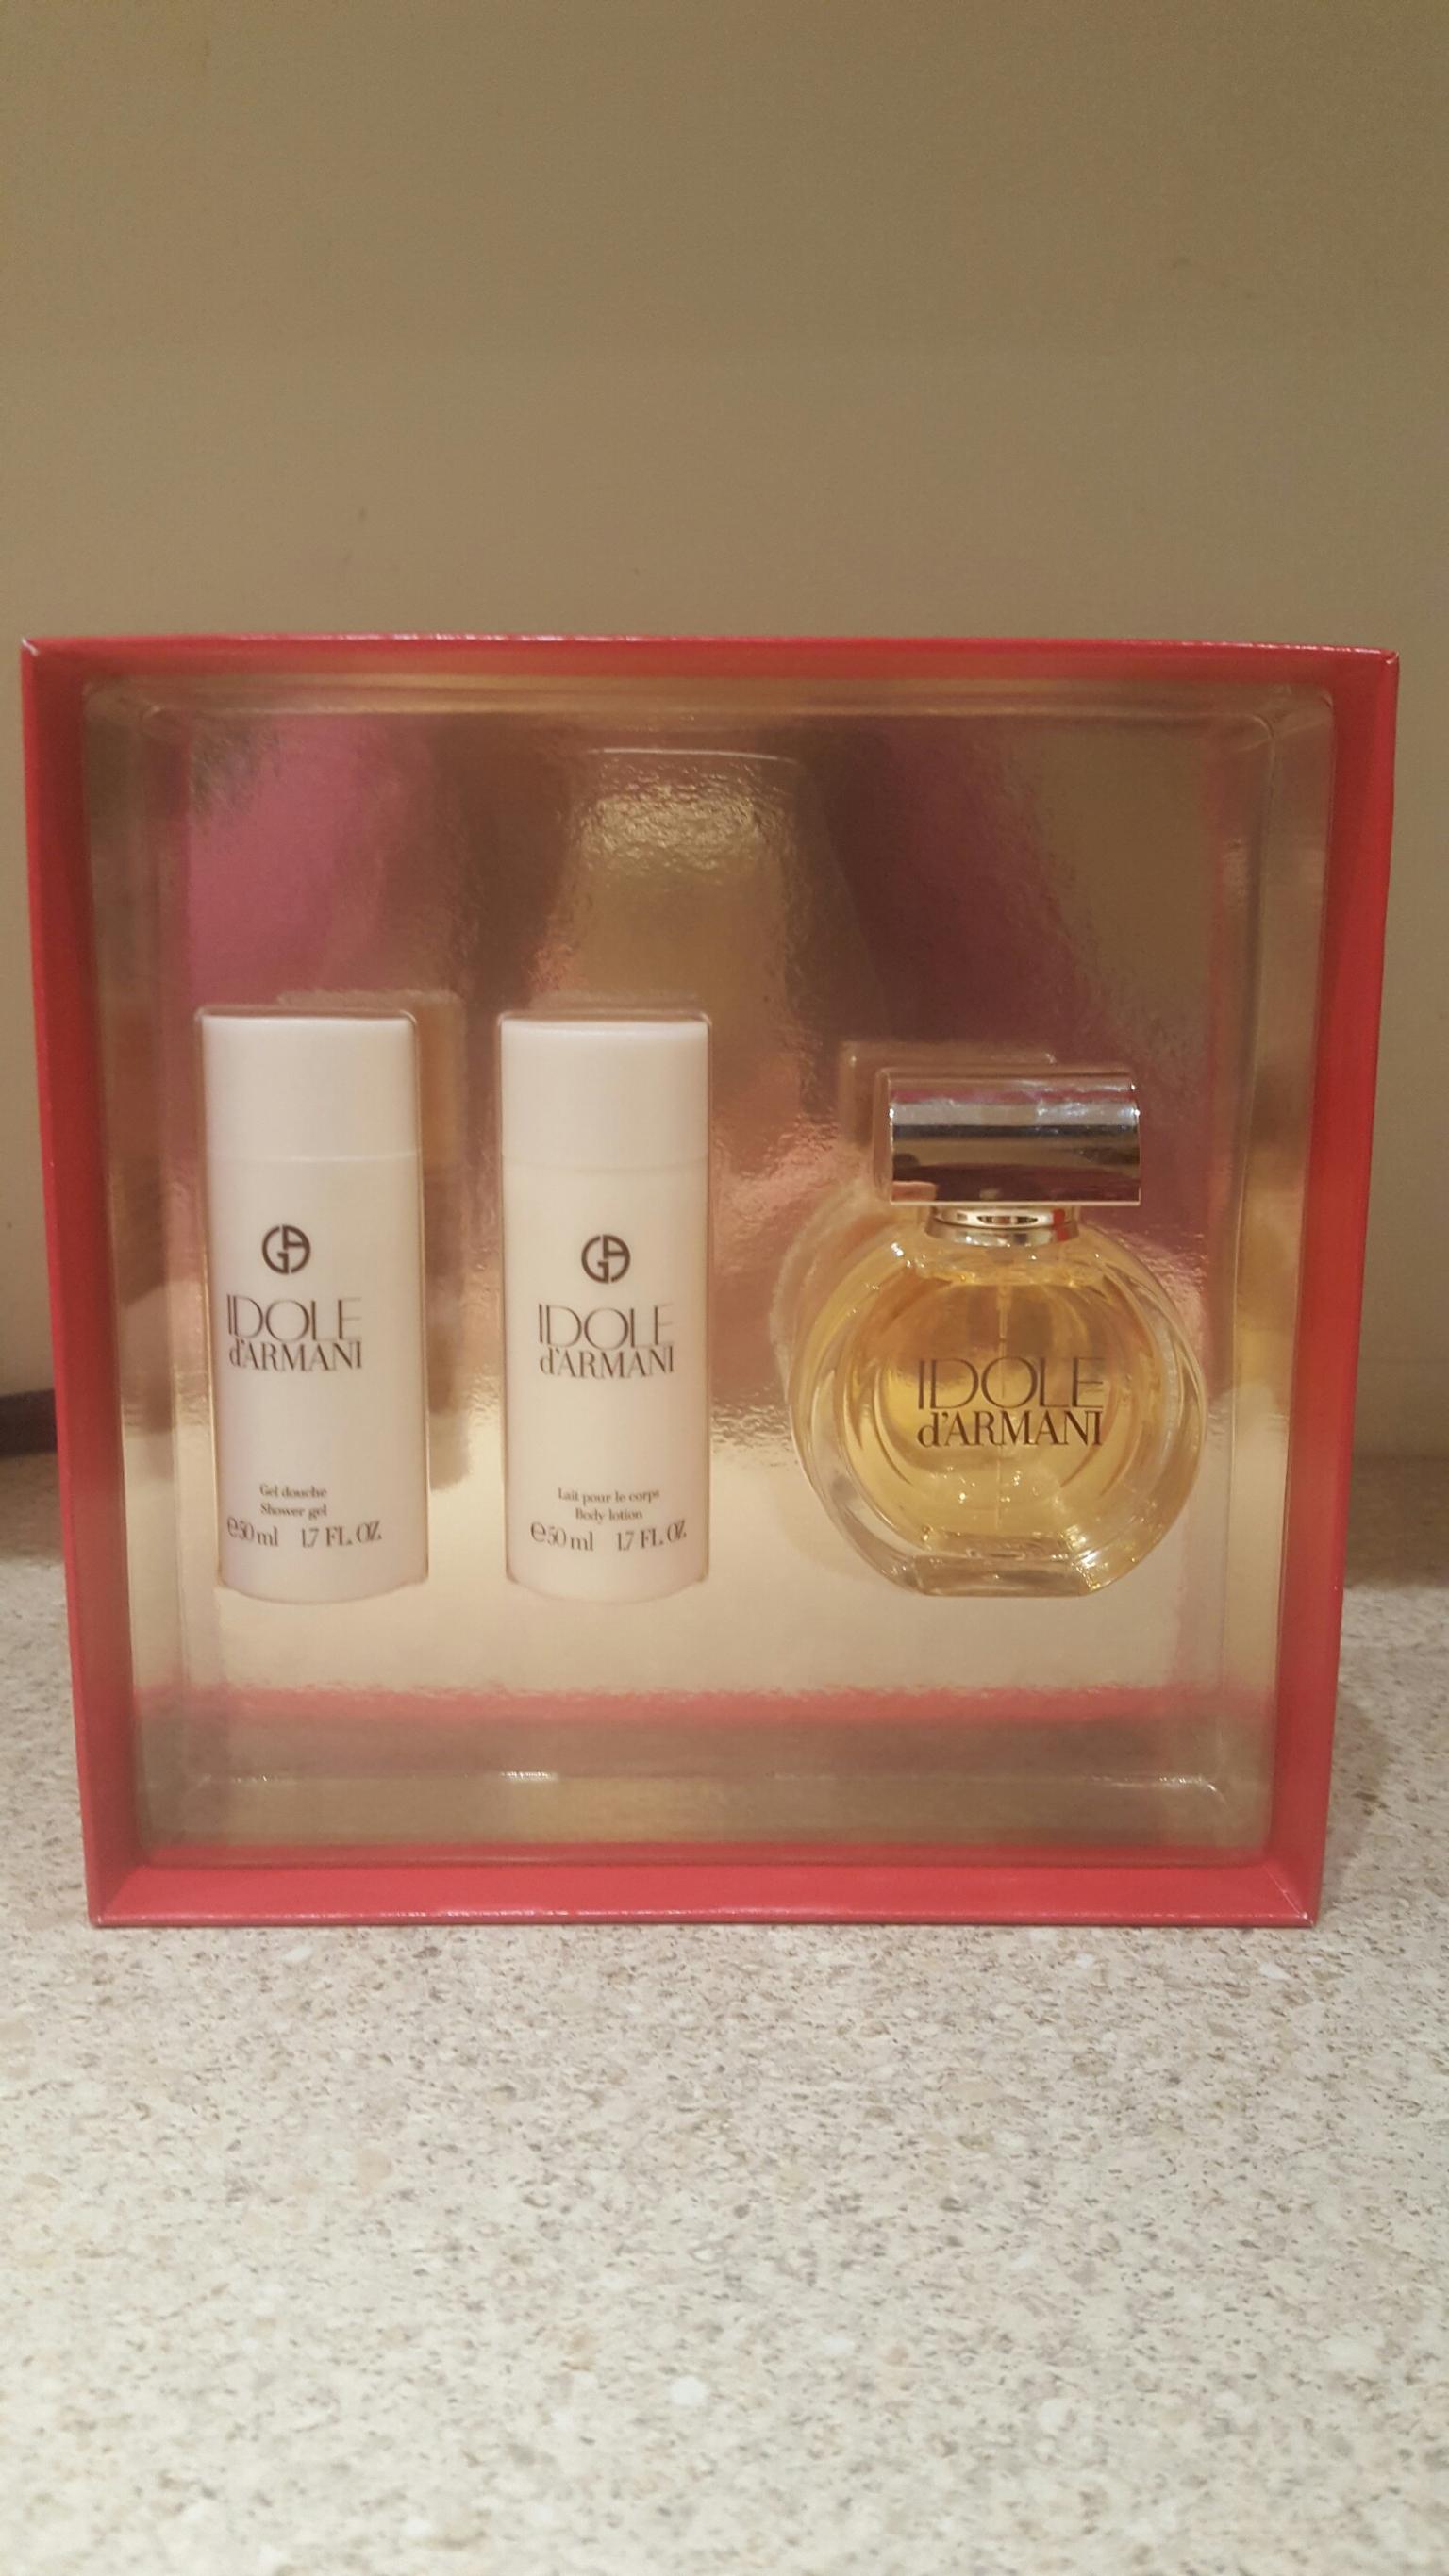 armani idole perfume gift set